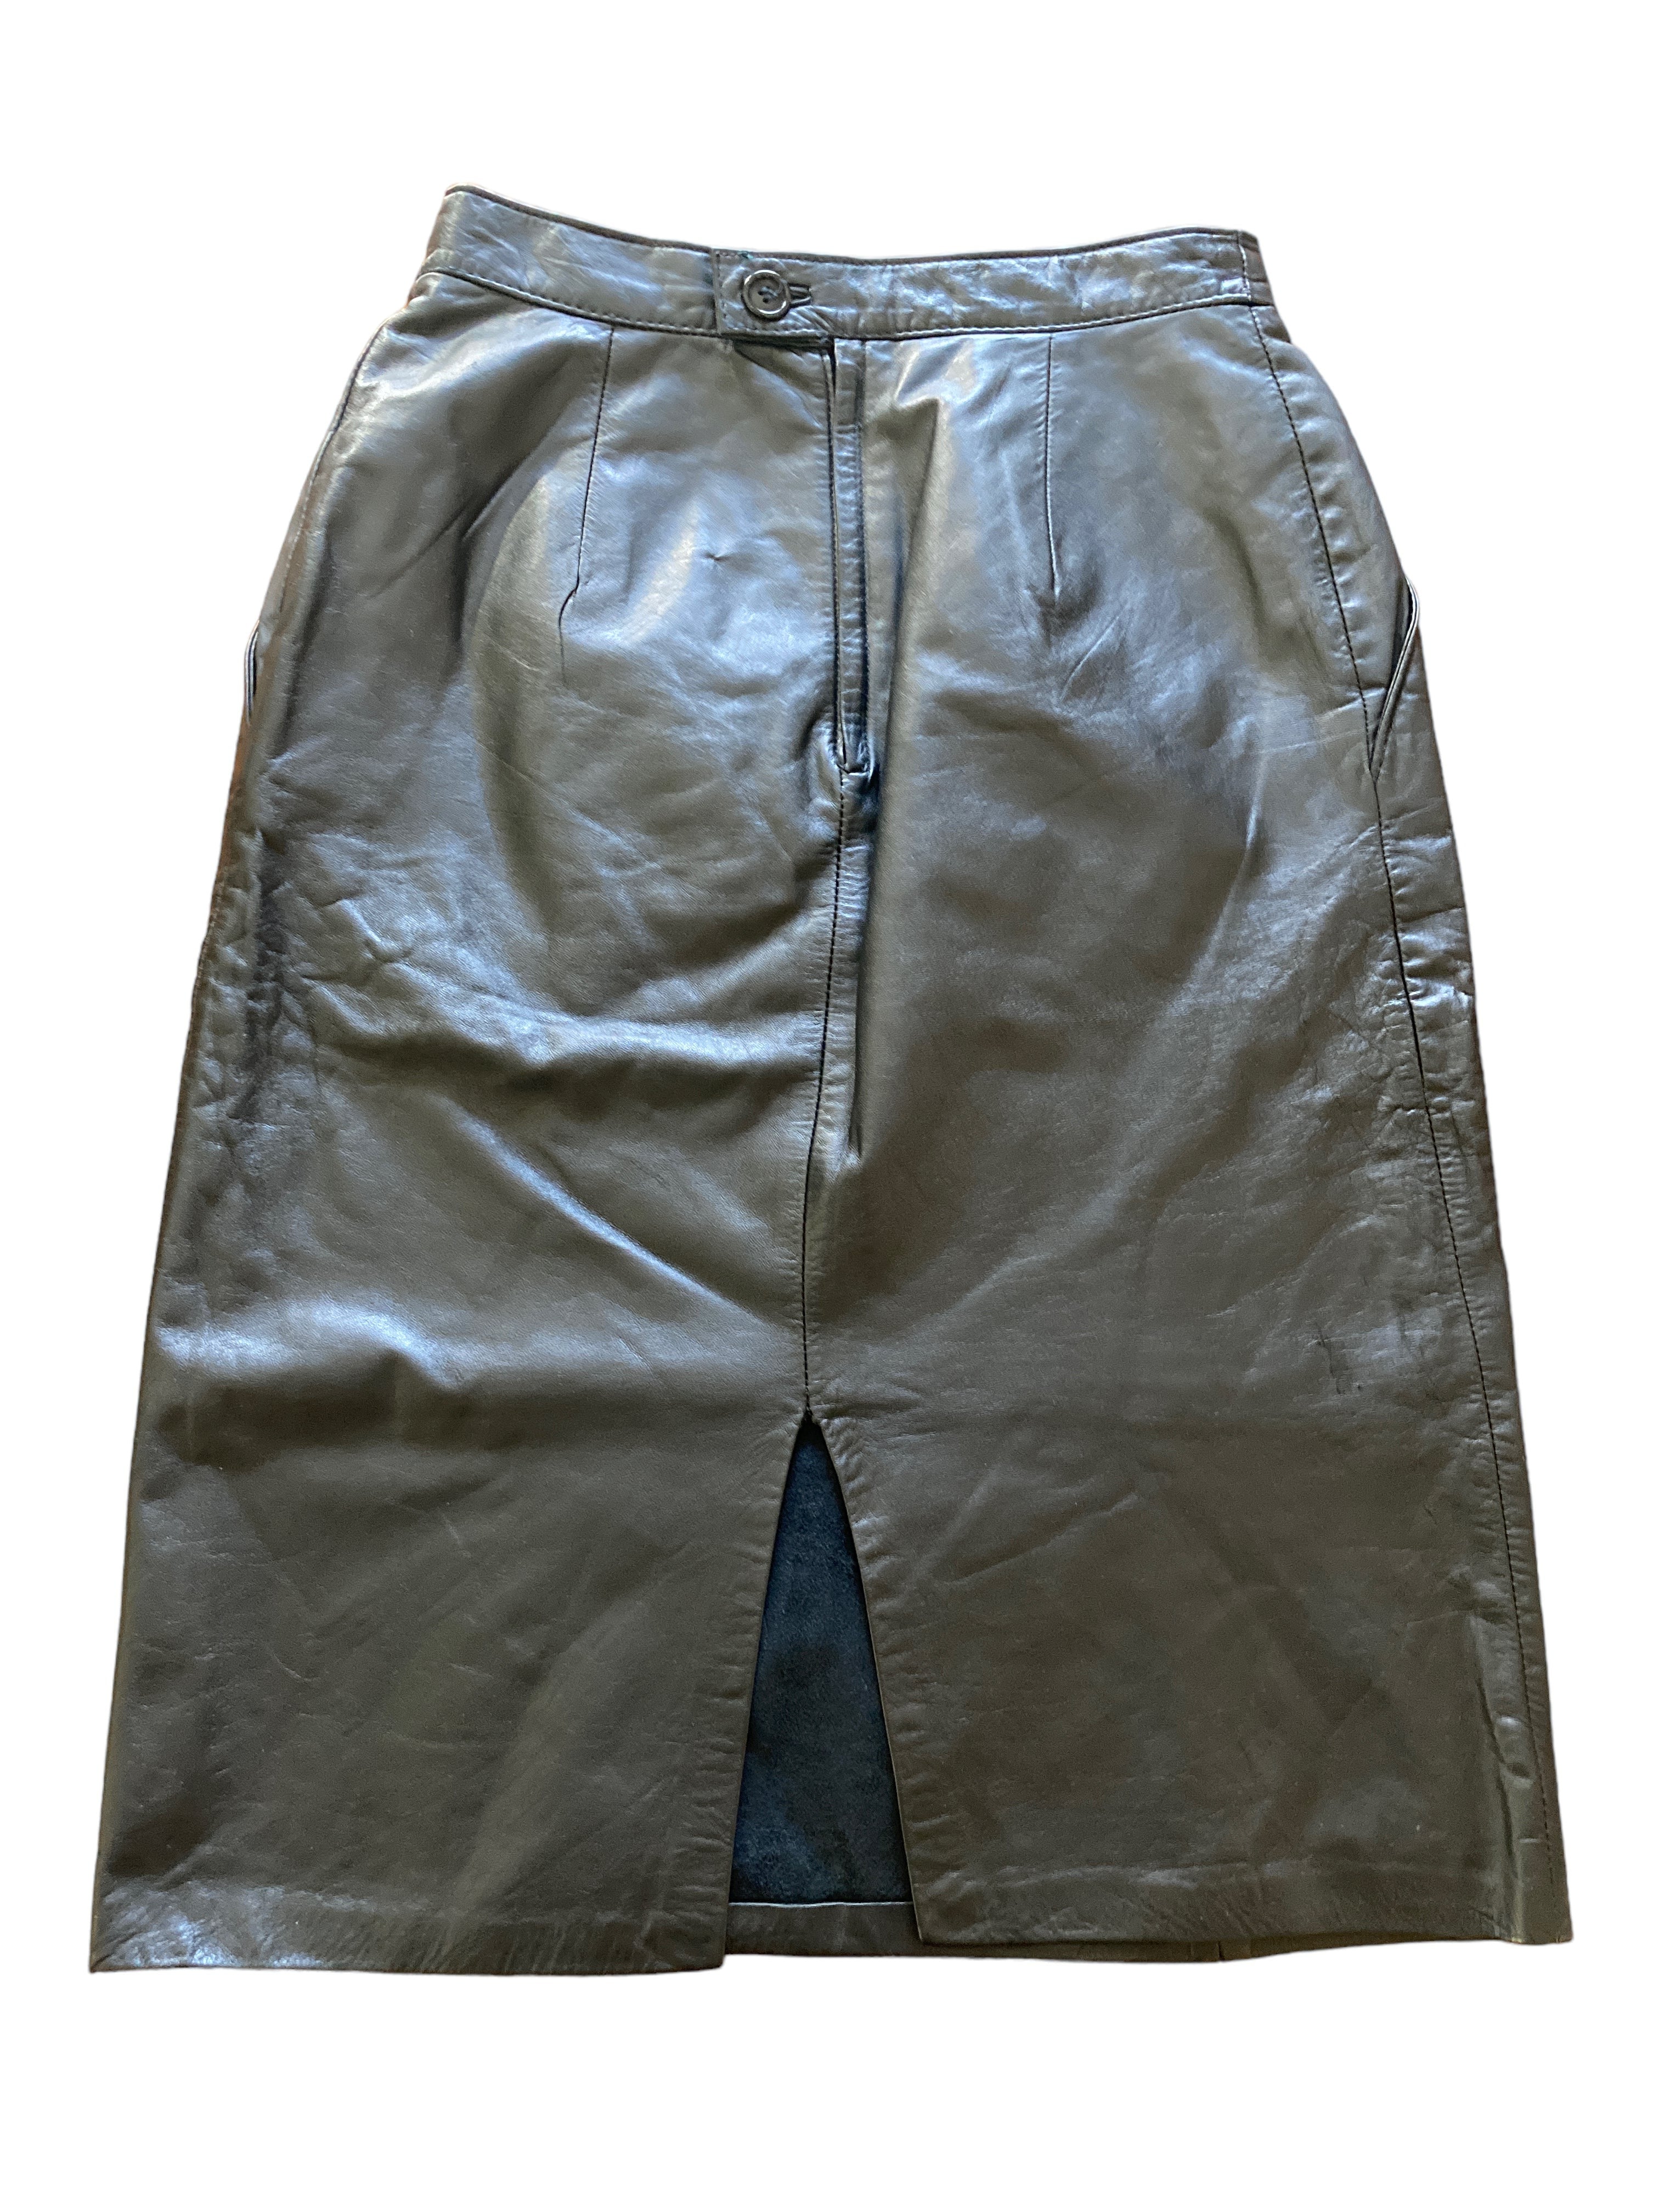 Vintage J. Percy for Marvin Richards Black Leather Skirt, 10